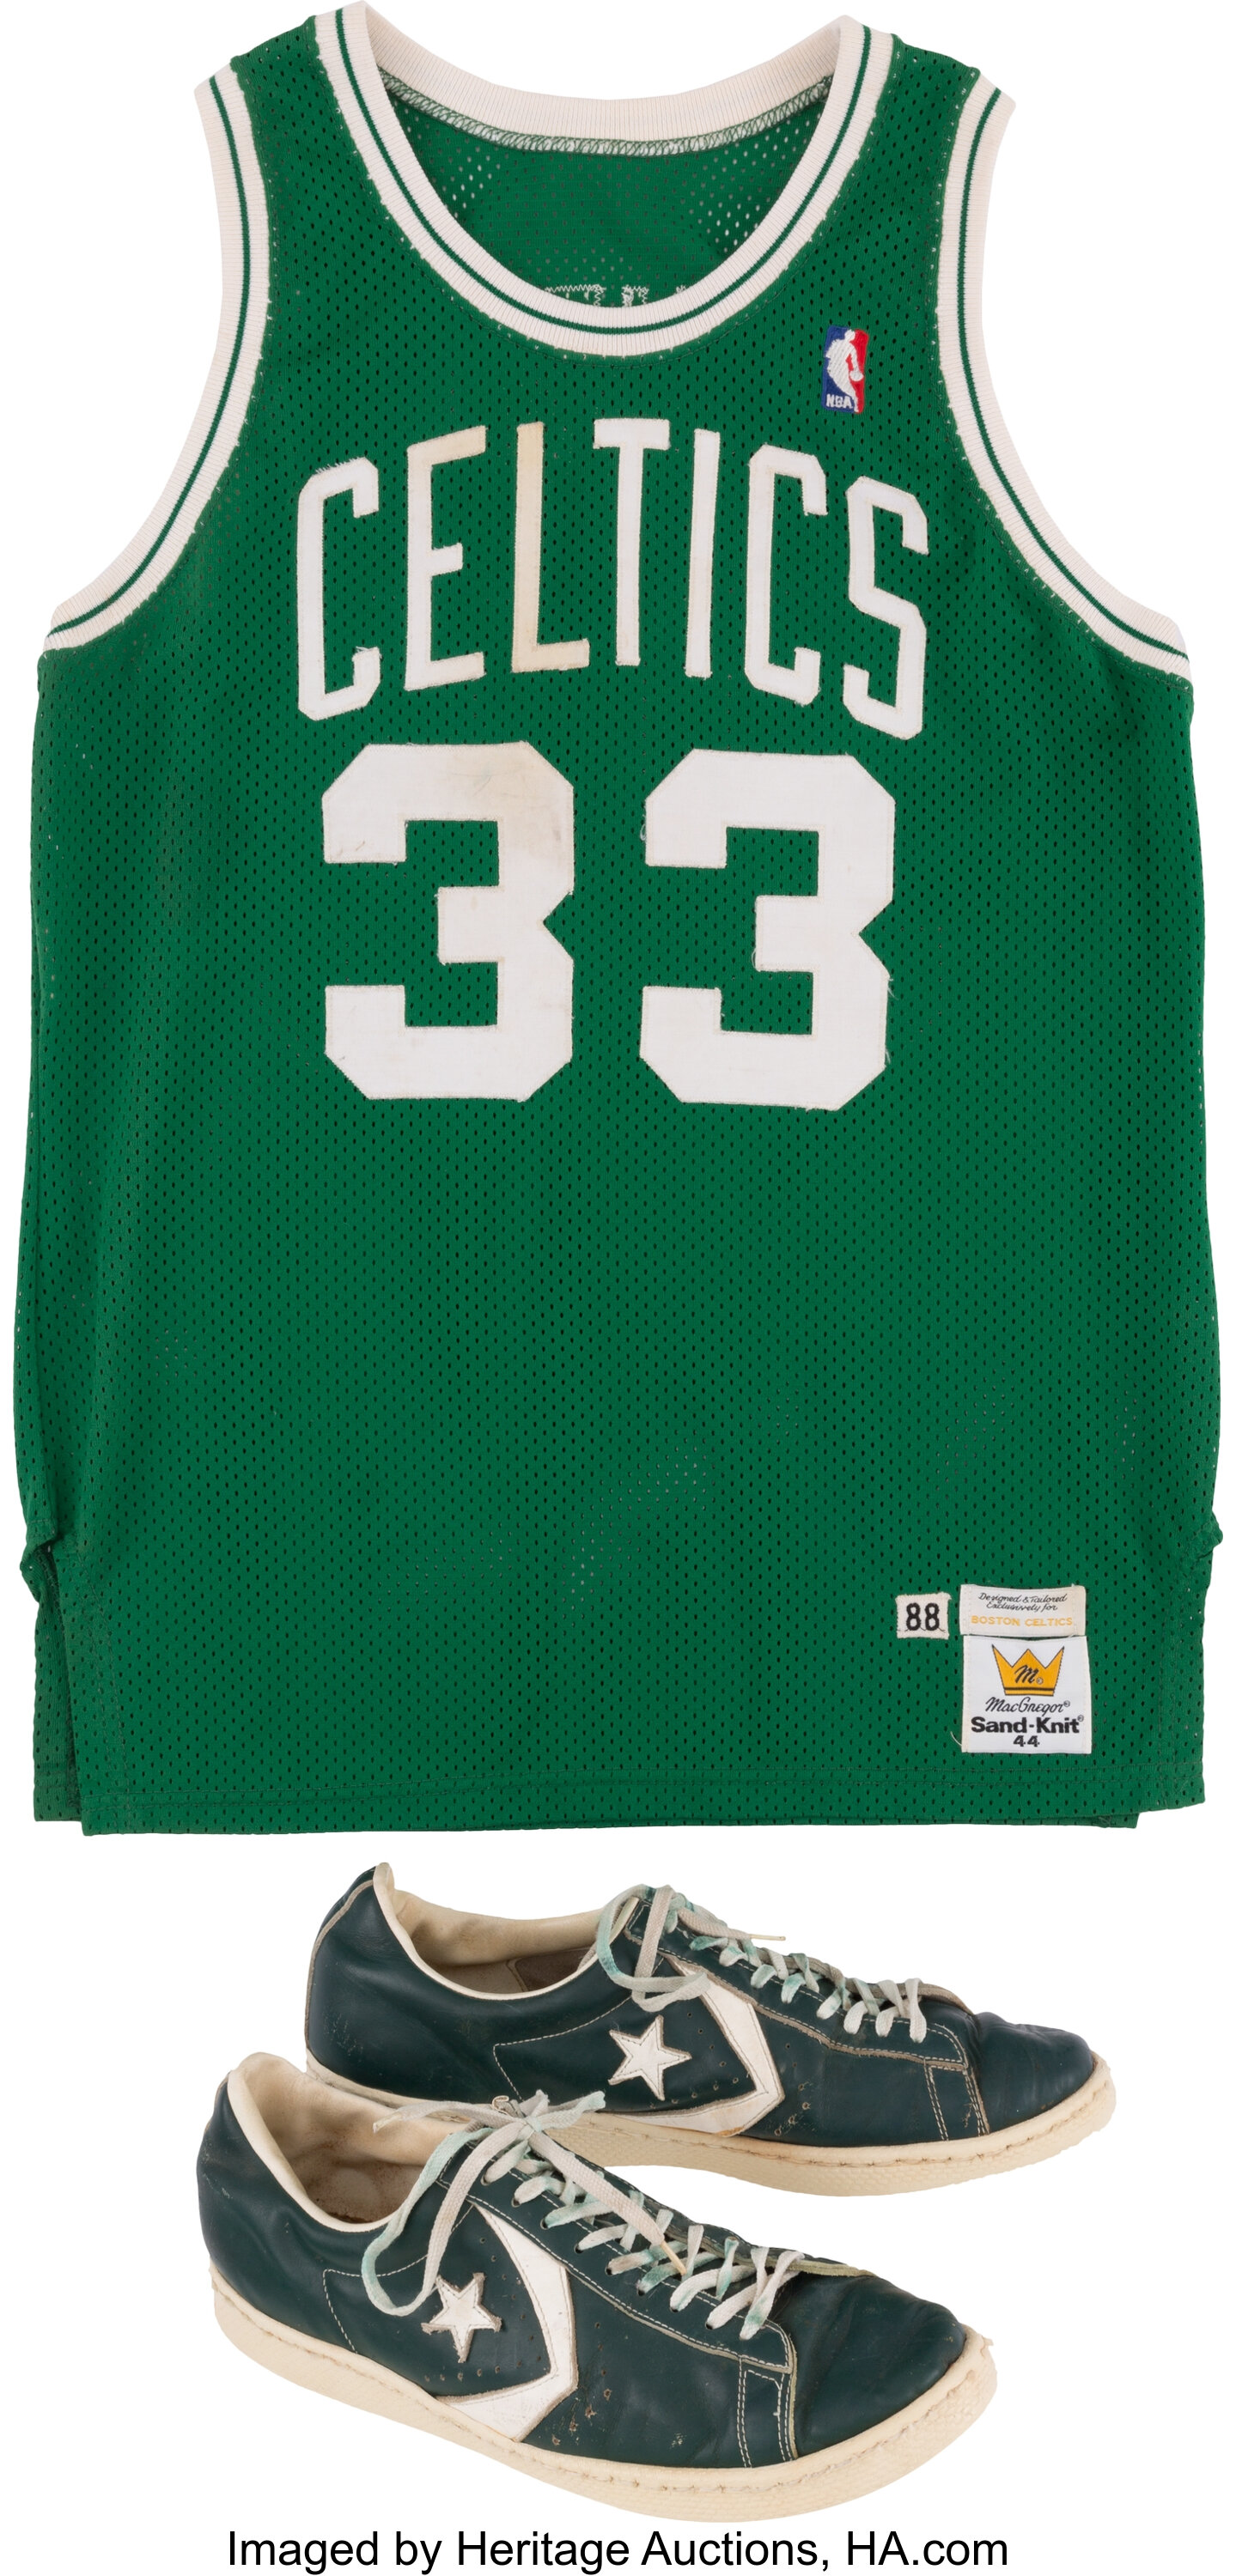 Boston Celtics Larry Bird 1989/90 MacGregor Sand-Knit Jersey - The